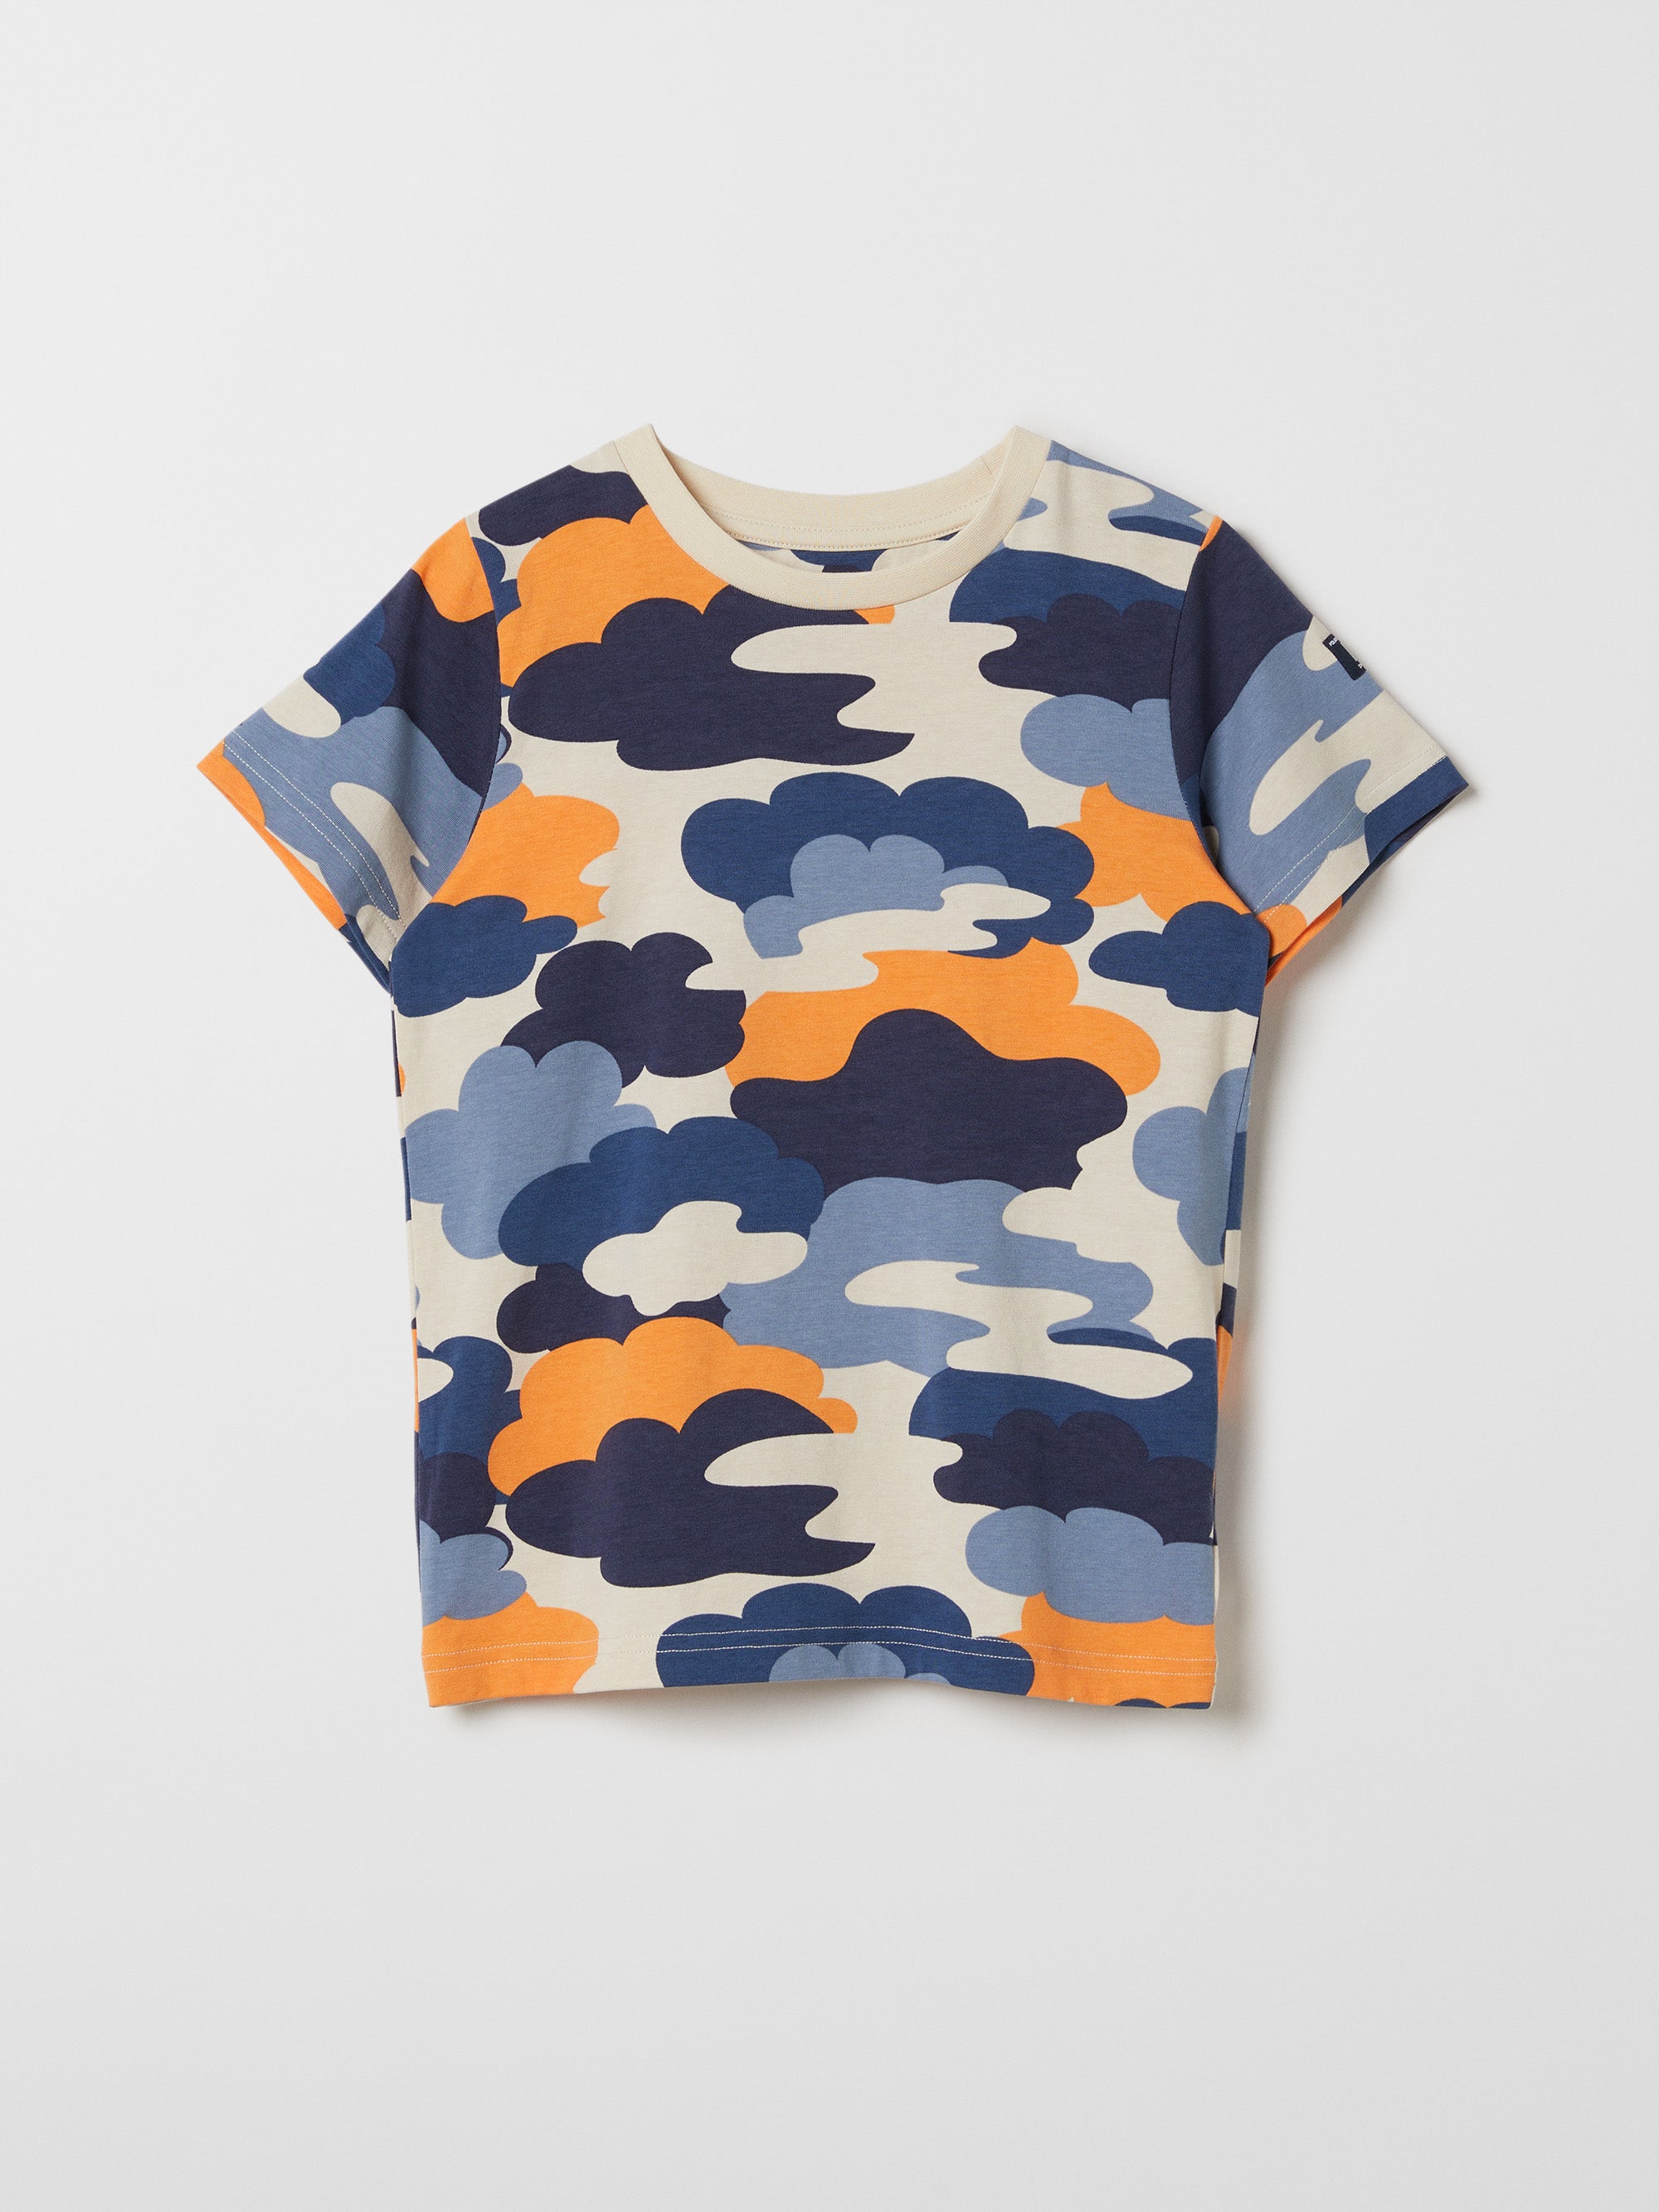 Cloud Print Kids T-shirt